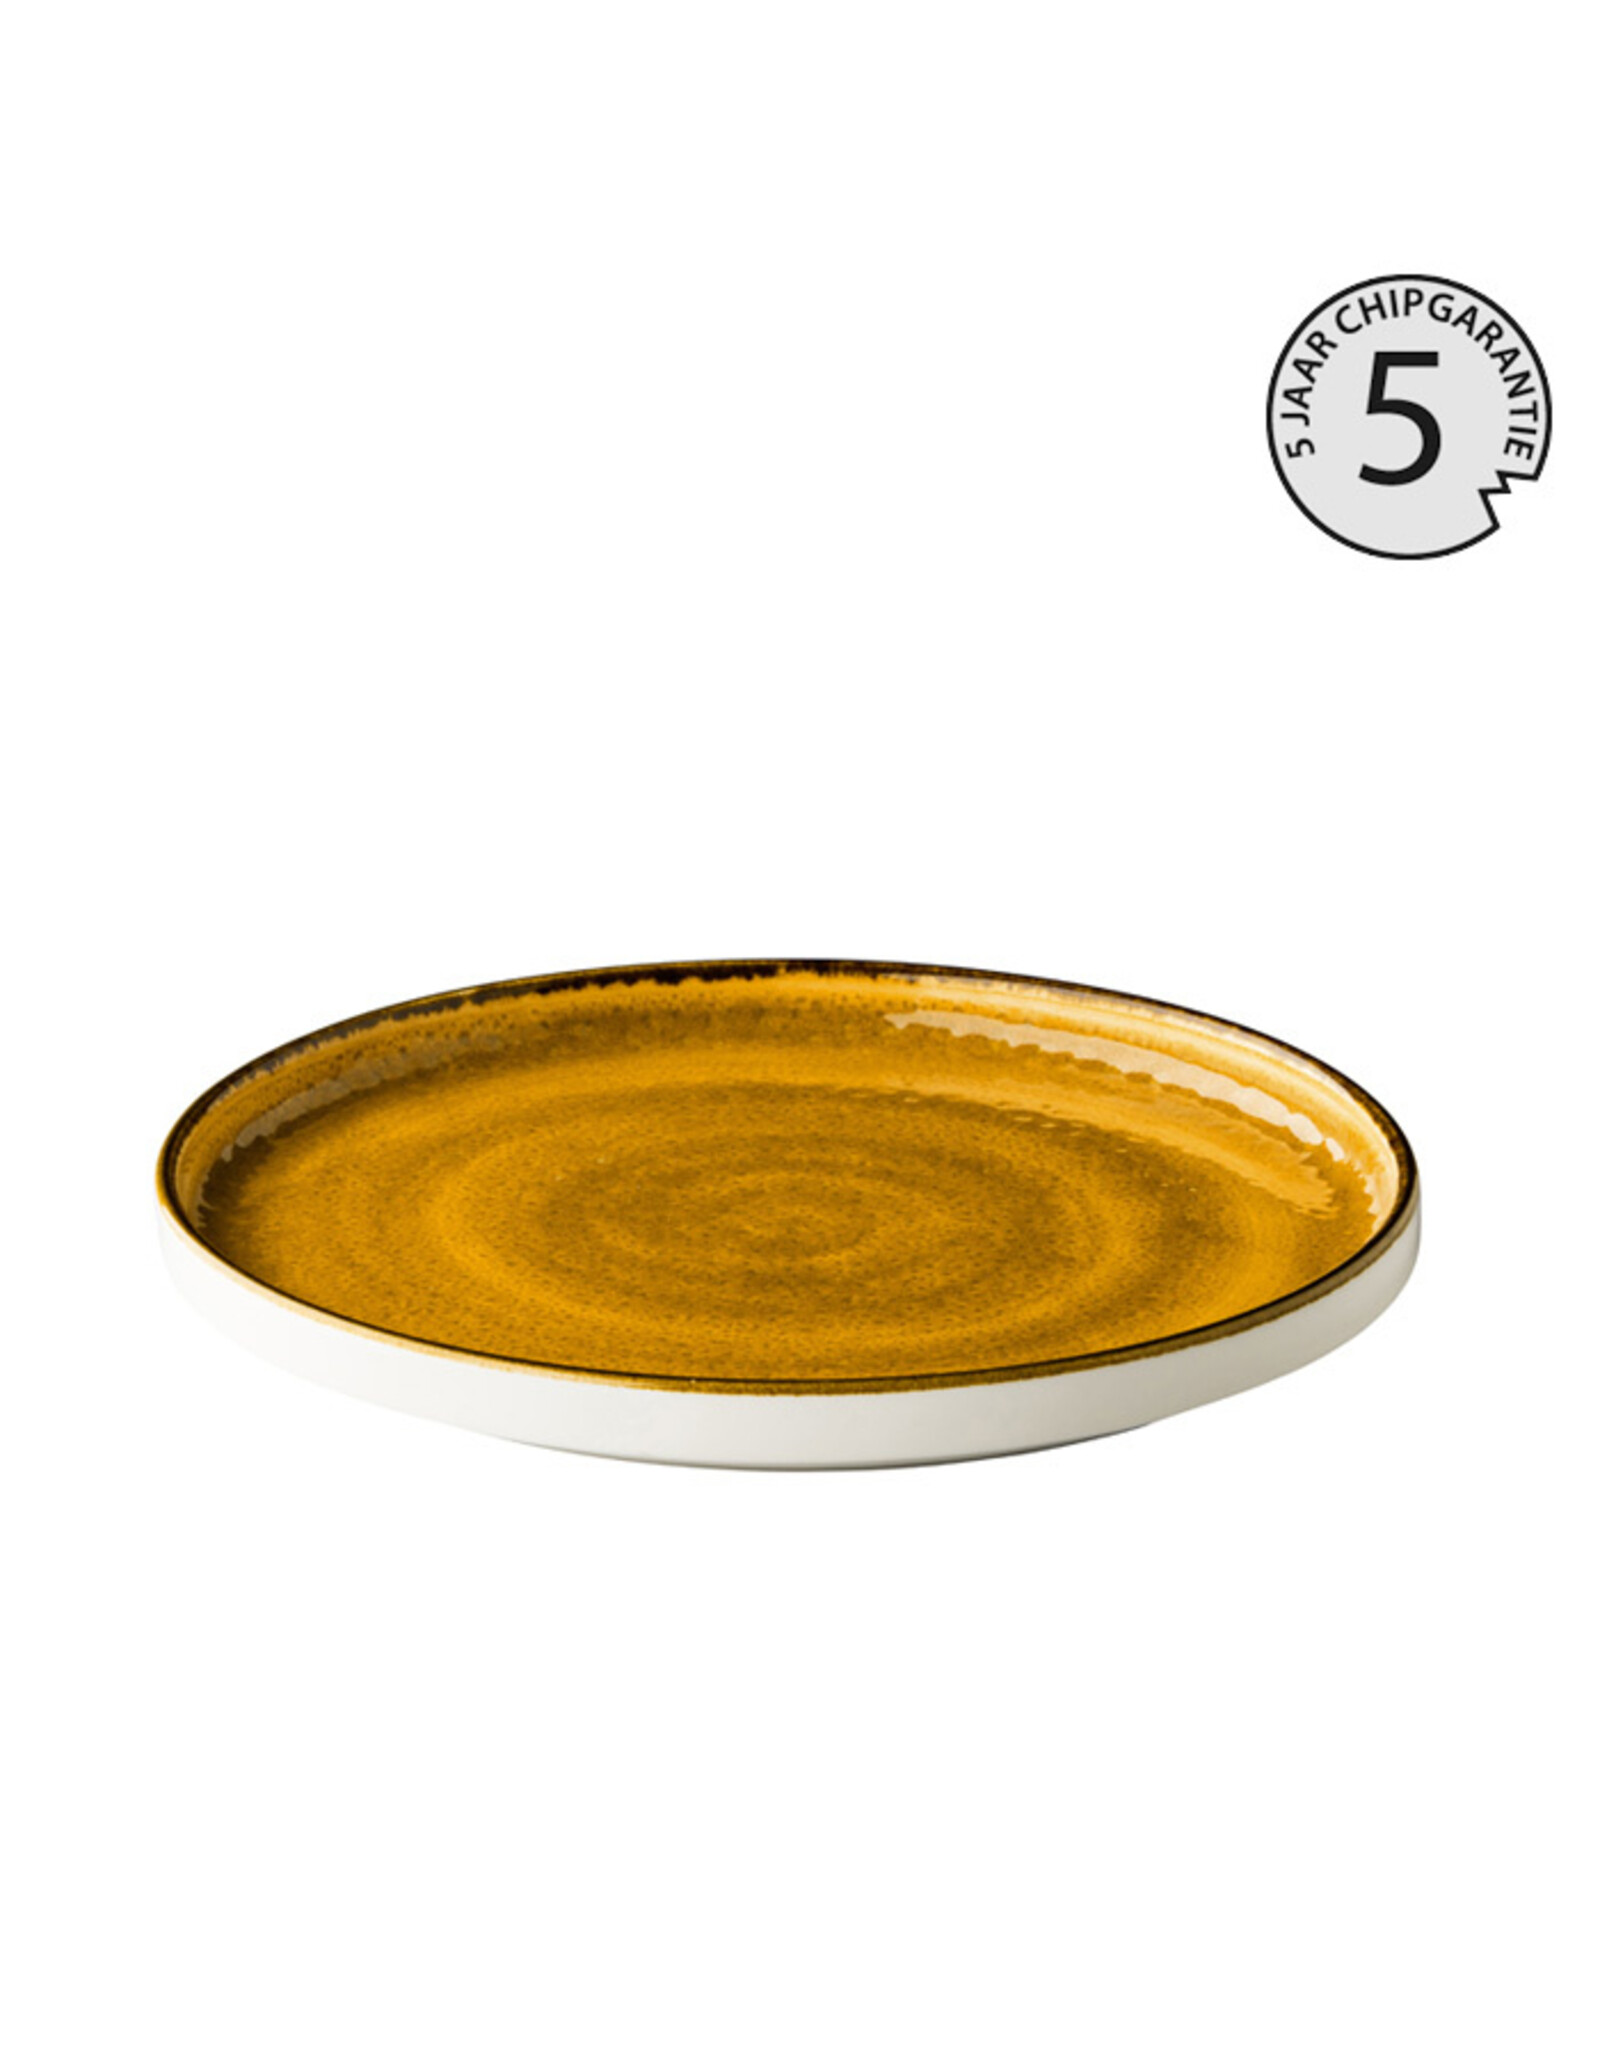 Stylepoint Jersey rond bord opstaande rand geel 20,4 cm stapelbaar - 5 jaar chipgarantie